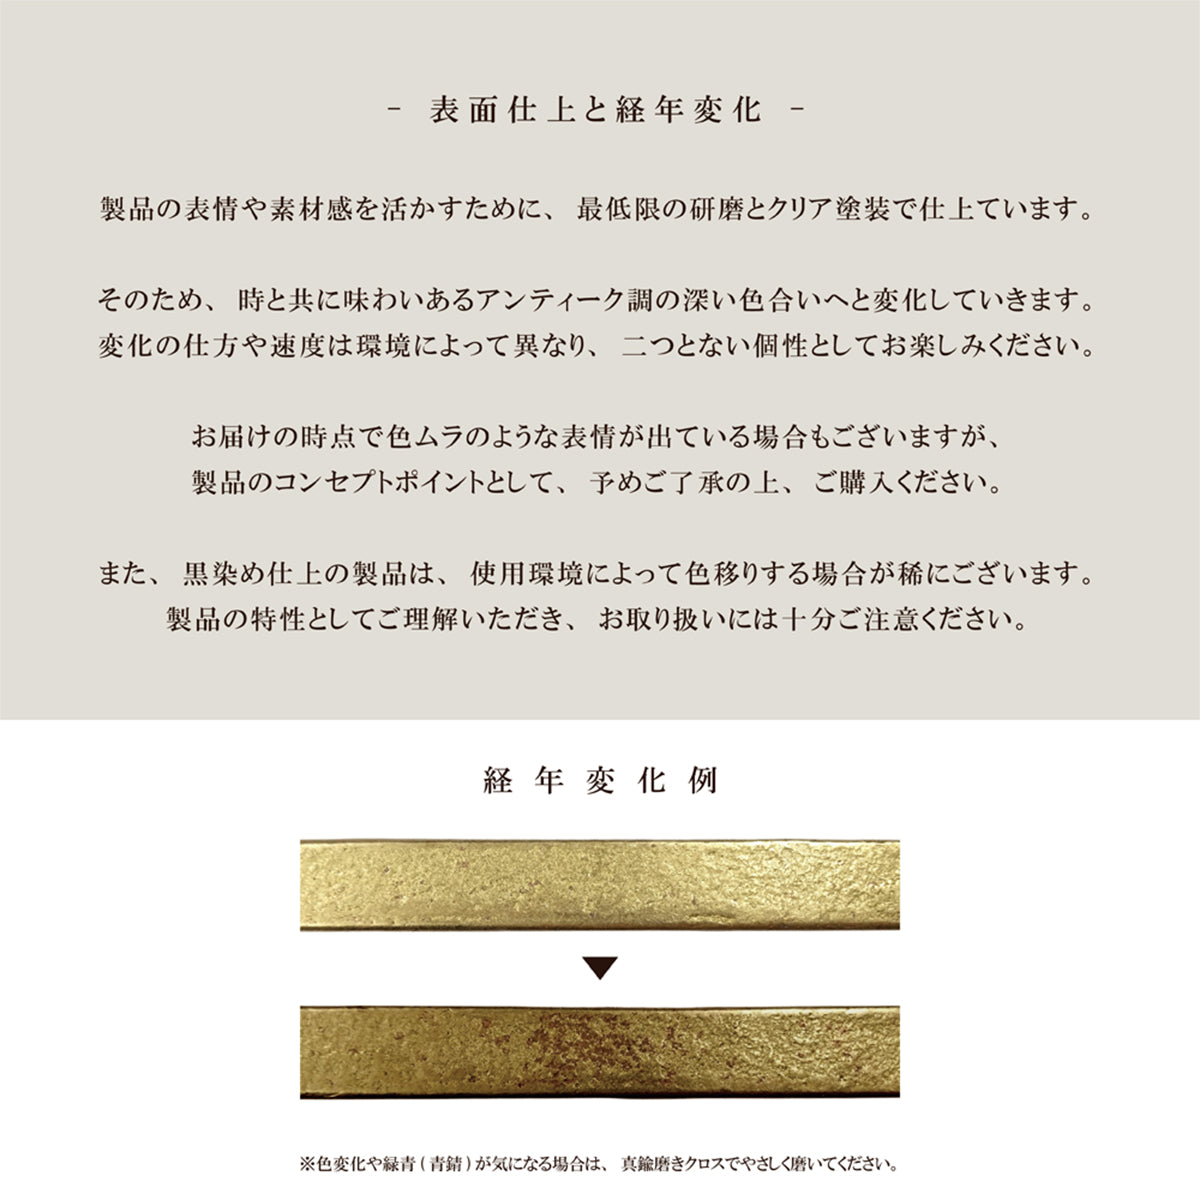 Brass Casting 真鍮鋳物 フック (小1段 黒染め CB-201)